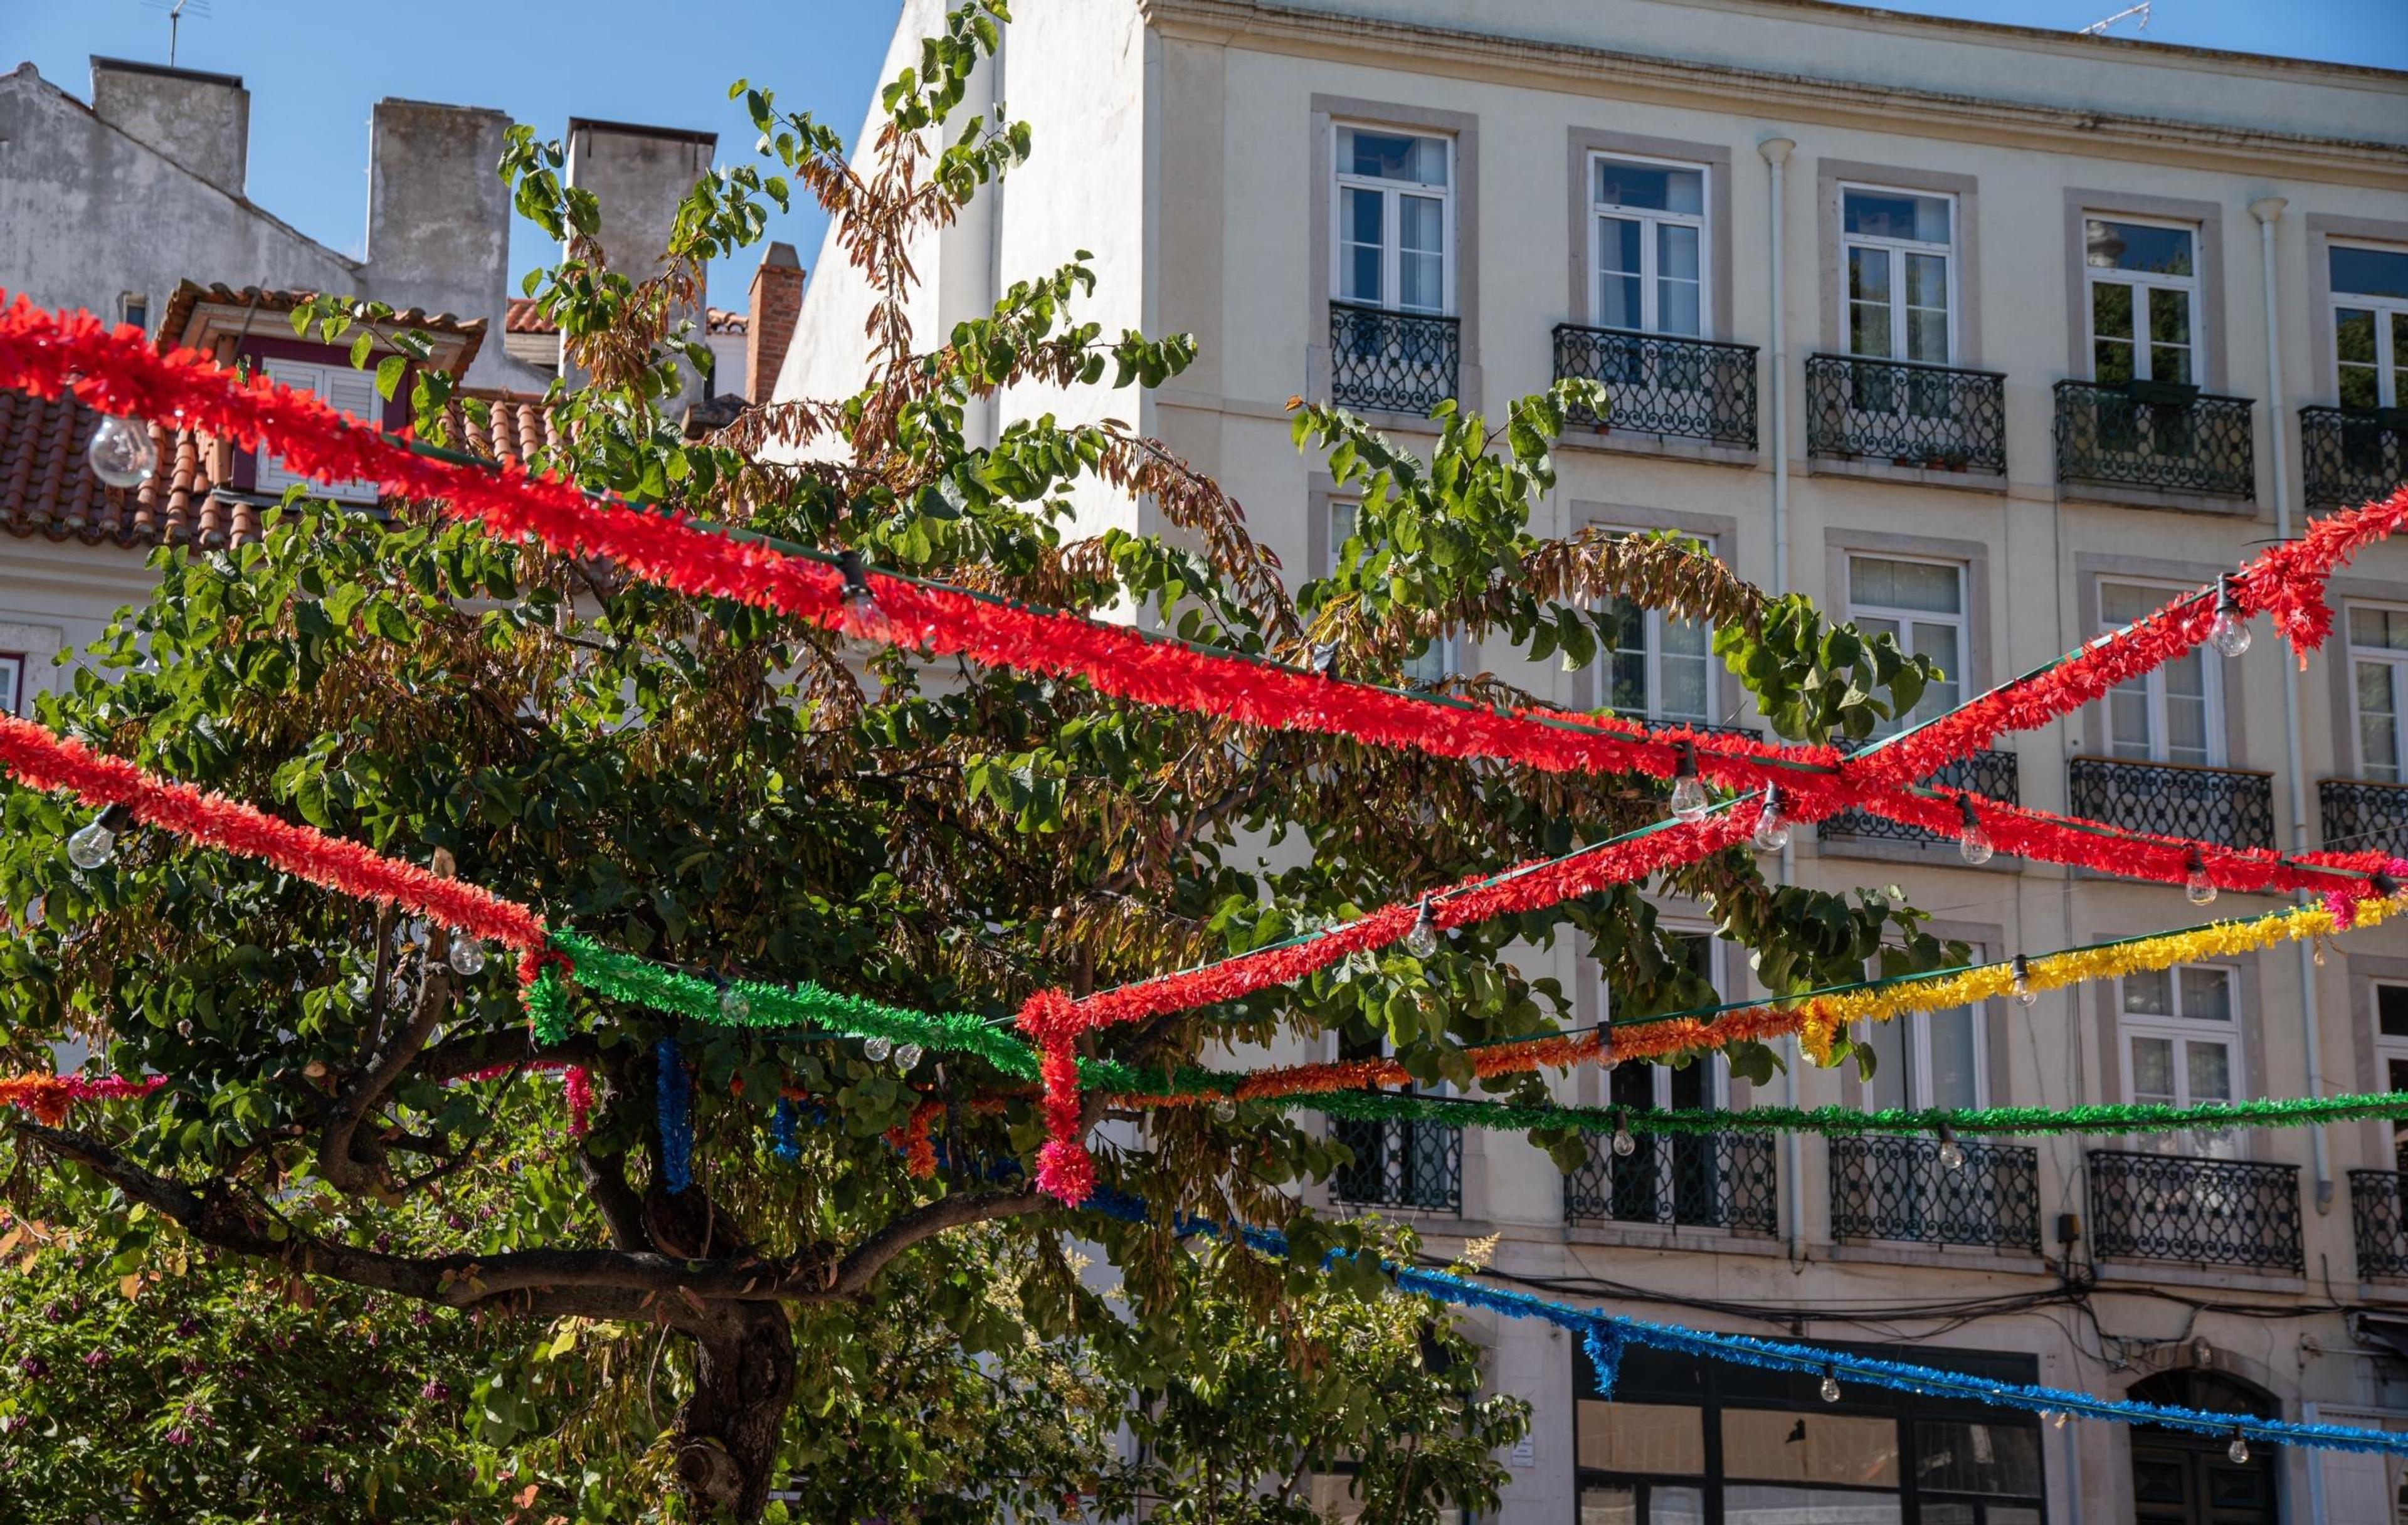 Streets of the Lisbon are preparing for Santo Antonio Festival